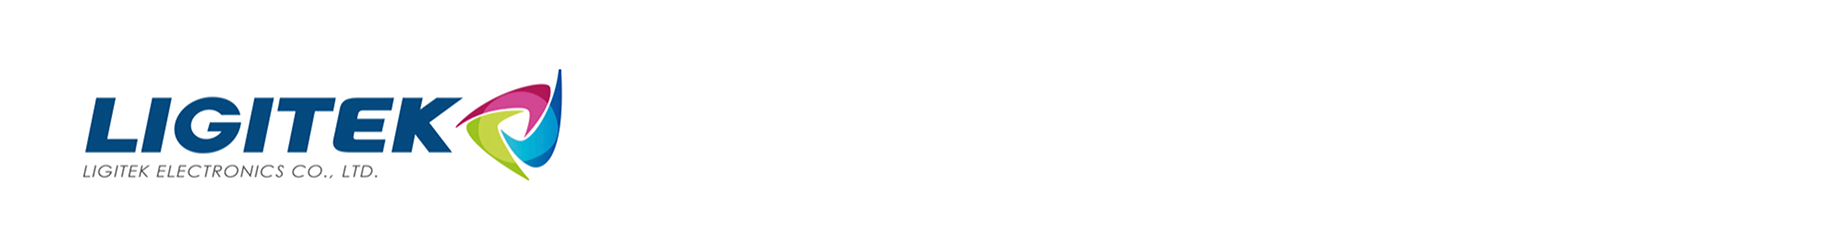 Ligitek Logo